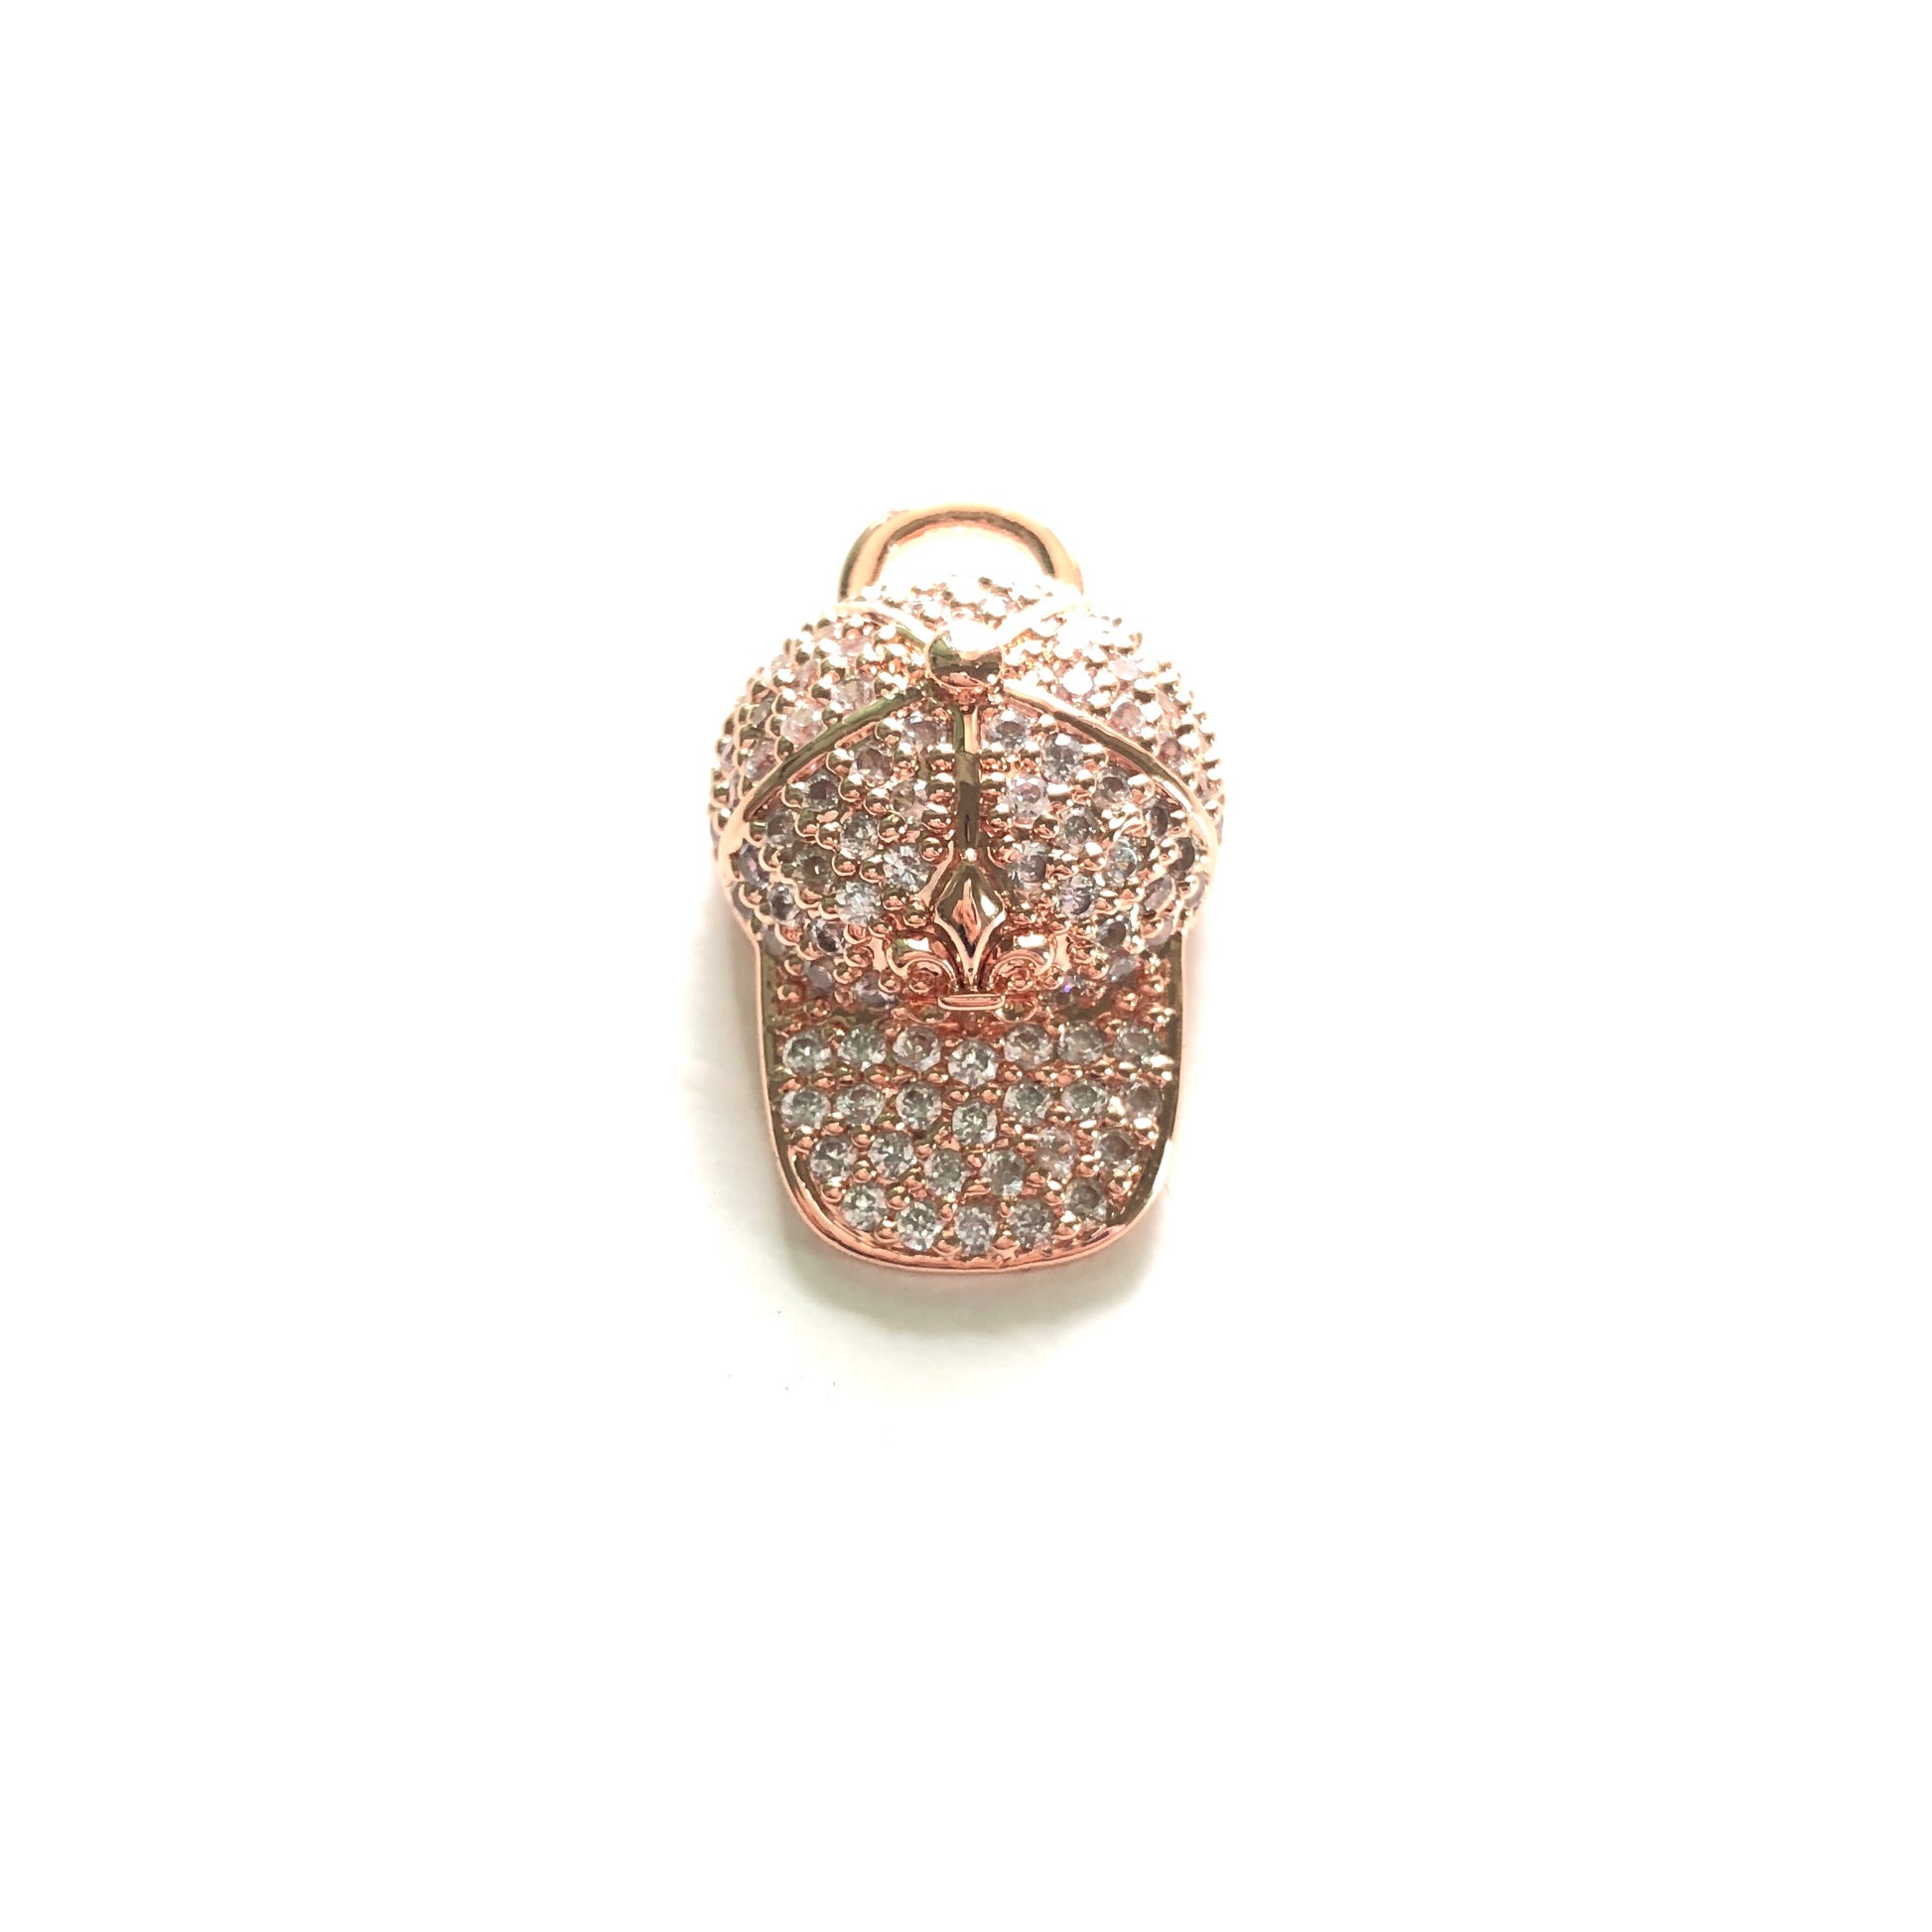 10pcs/lot 25*16mm CZ Pave Fleur De Lis BaseBall Cap Saints Charms Rose Gold CZ Paved Charms Fashion Louisiana Inspired On Sale Charms Beads Beyond